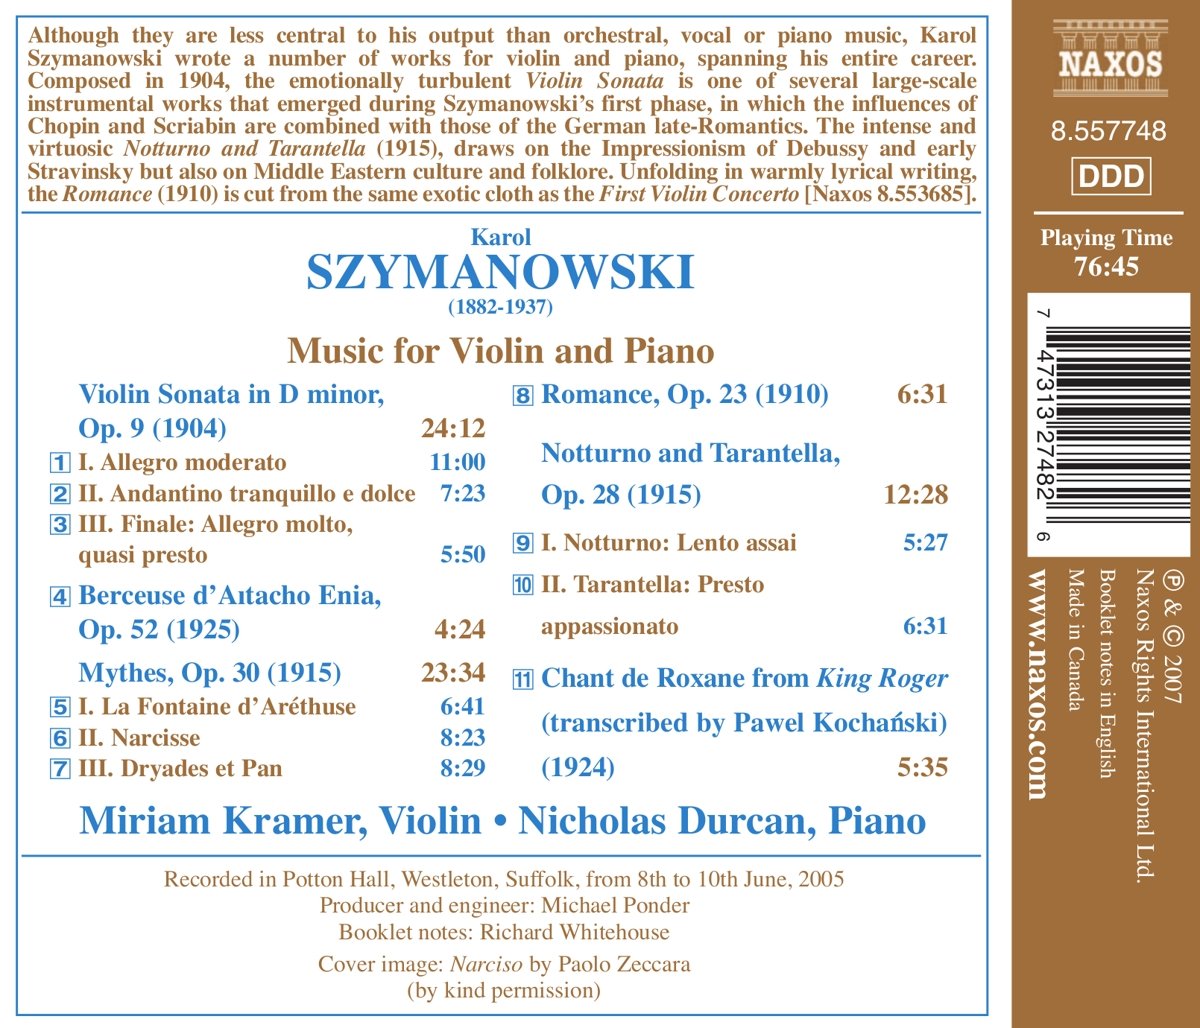 Miriam Kramer 시마노프스키: 바이올린 소나타, 전설, 로망스, 야상곡과 타란텔라 (Szymanowski: Violin Sonata Op,9, Mythes Op.30, Romance Op.23, Notturno and Tarantella Op.28)  